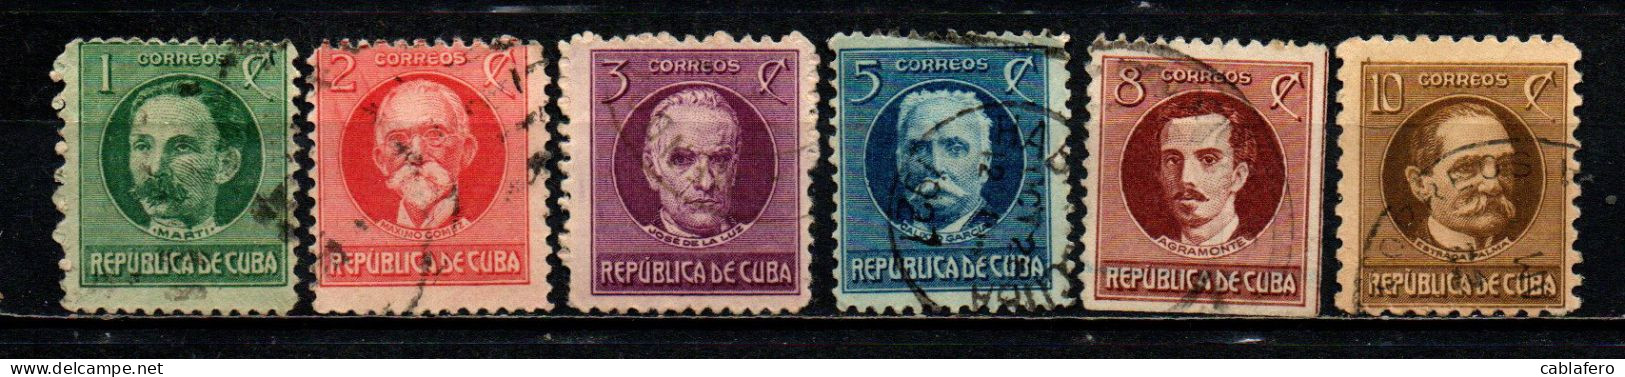 CUBA - 1917 - PERSONALITA' DEL SUDAMERICA: JOSE' MARTI, MAXIMO GOMEZ, JOSE' DE LA LUZ CABALLERO, CALIXTO GARCIA, IGNACIO - Oblitérés